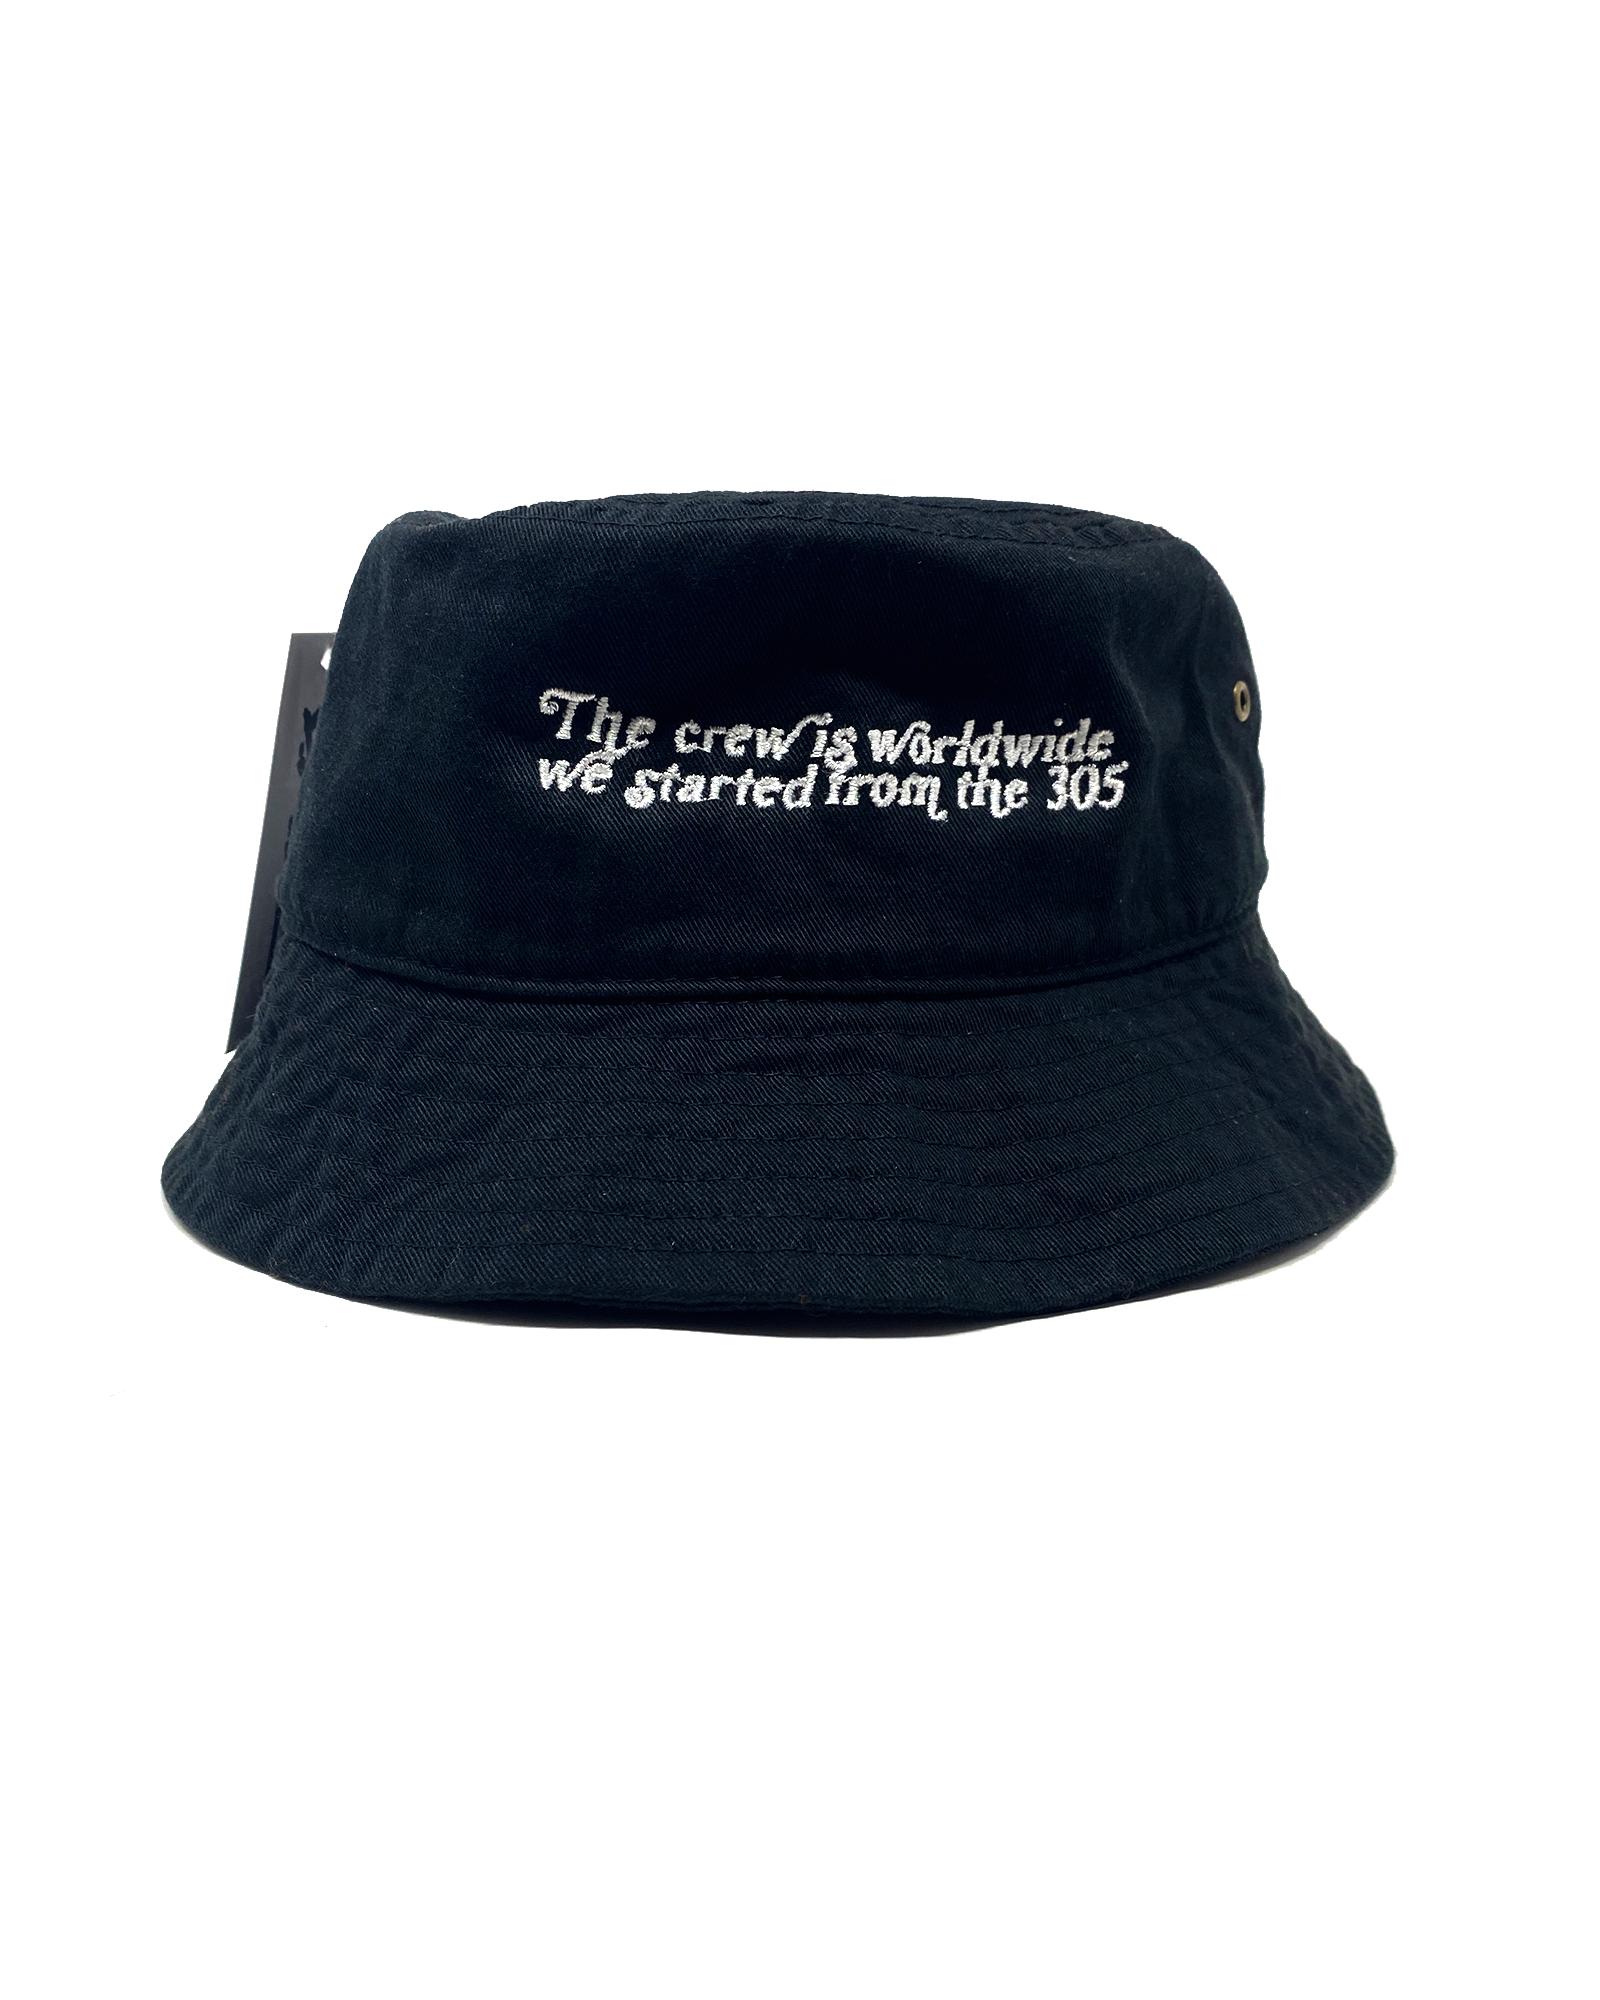 DADE Worldwide – Bucket Hat